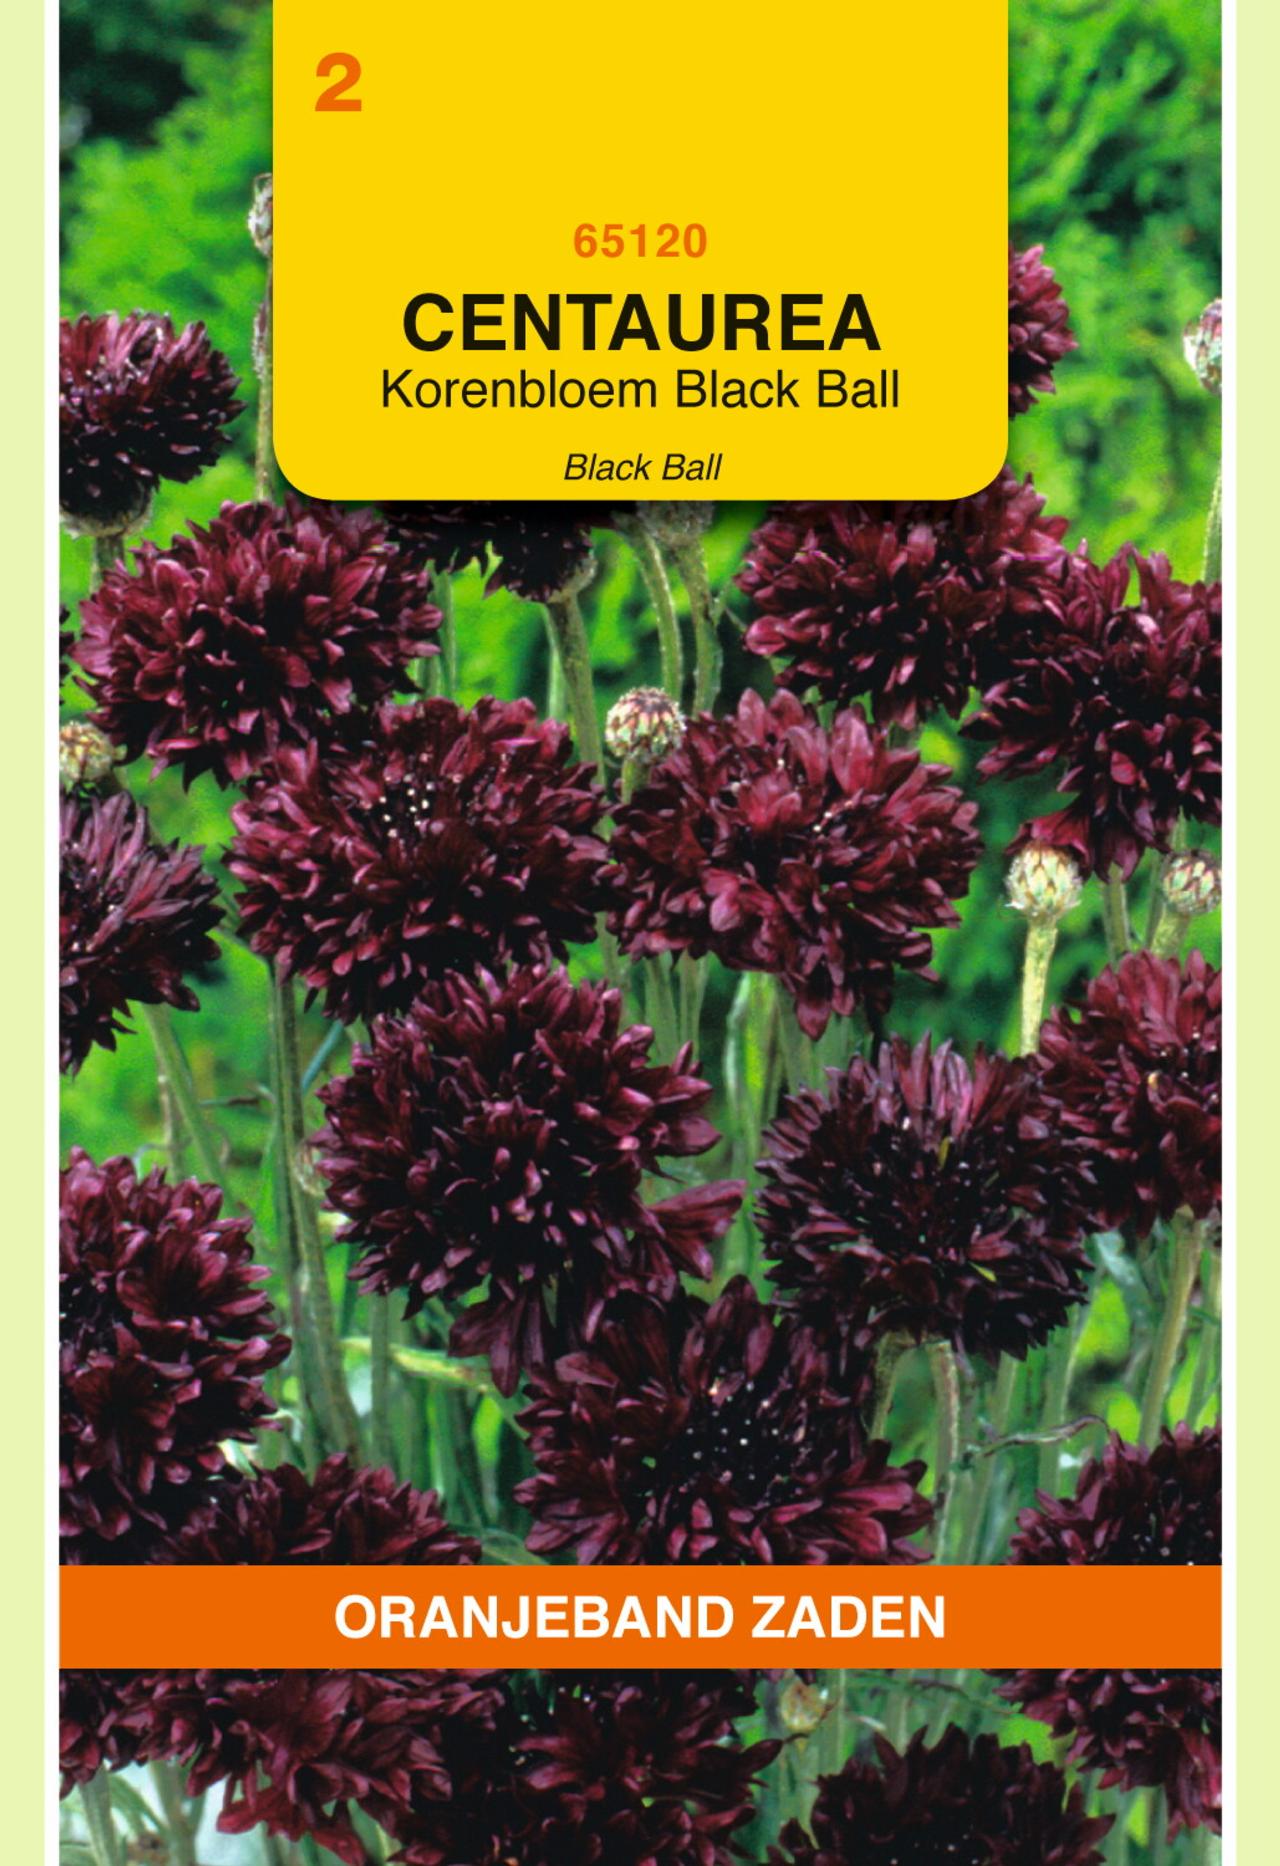 Centaurea cyanus 'Black Ball' plant